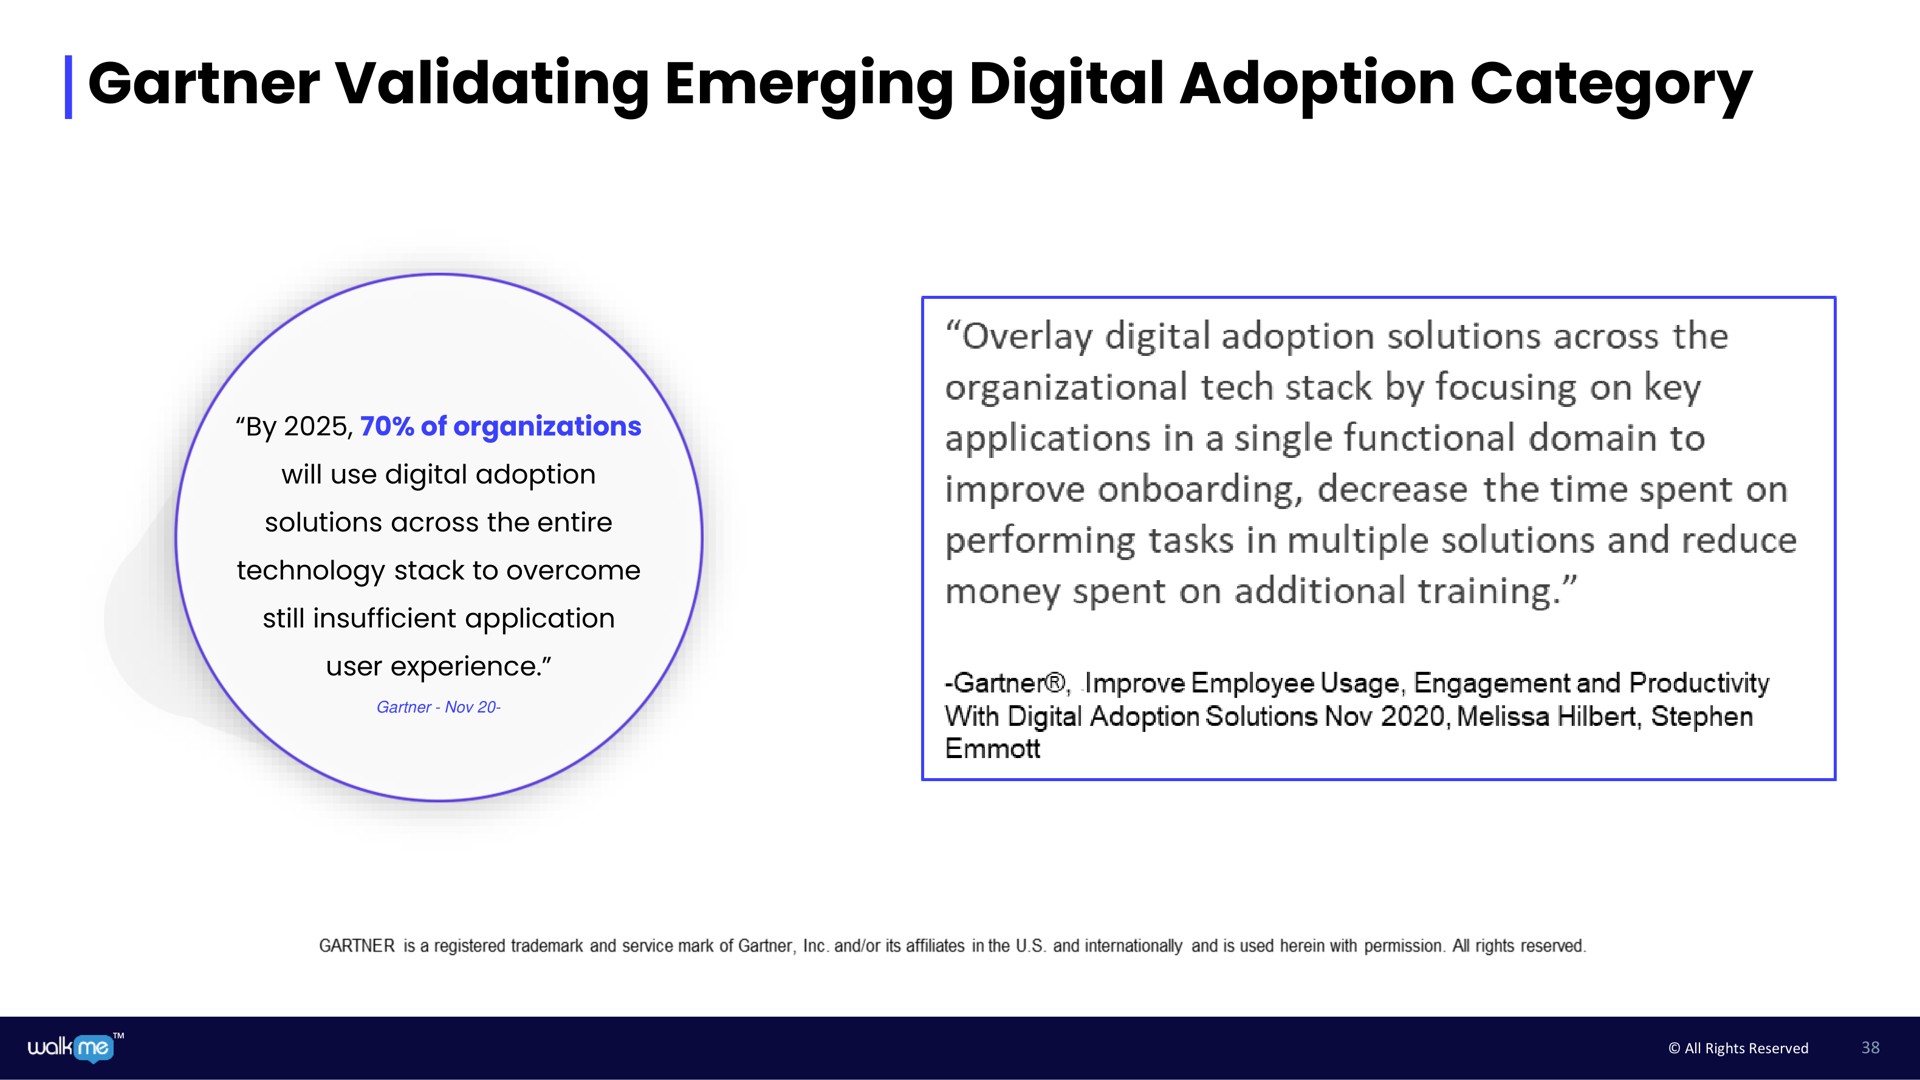 validating emerging digital adoption category | Walkme